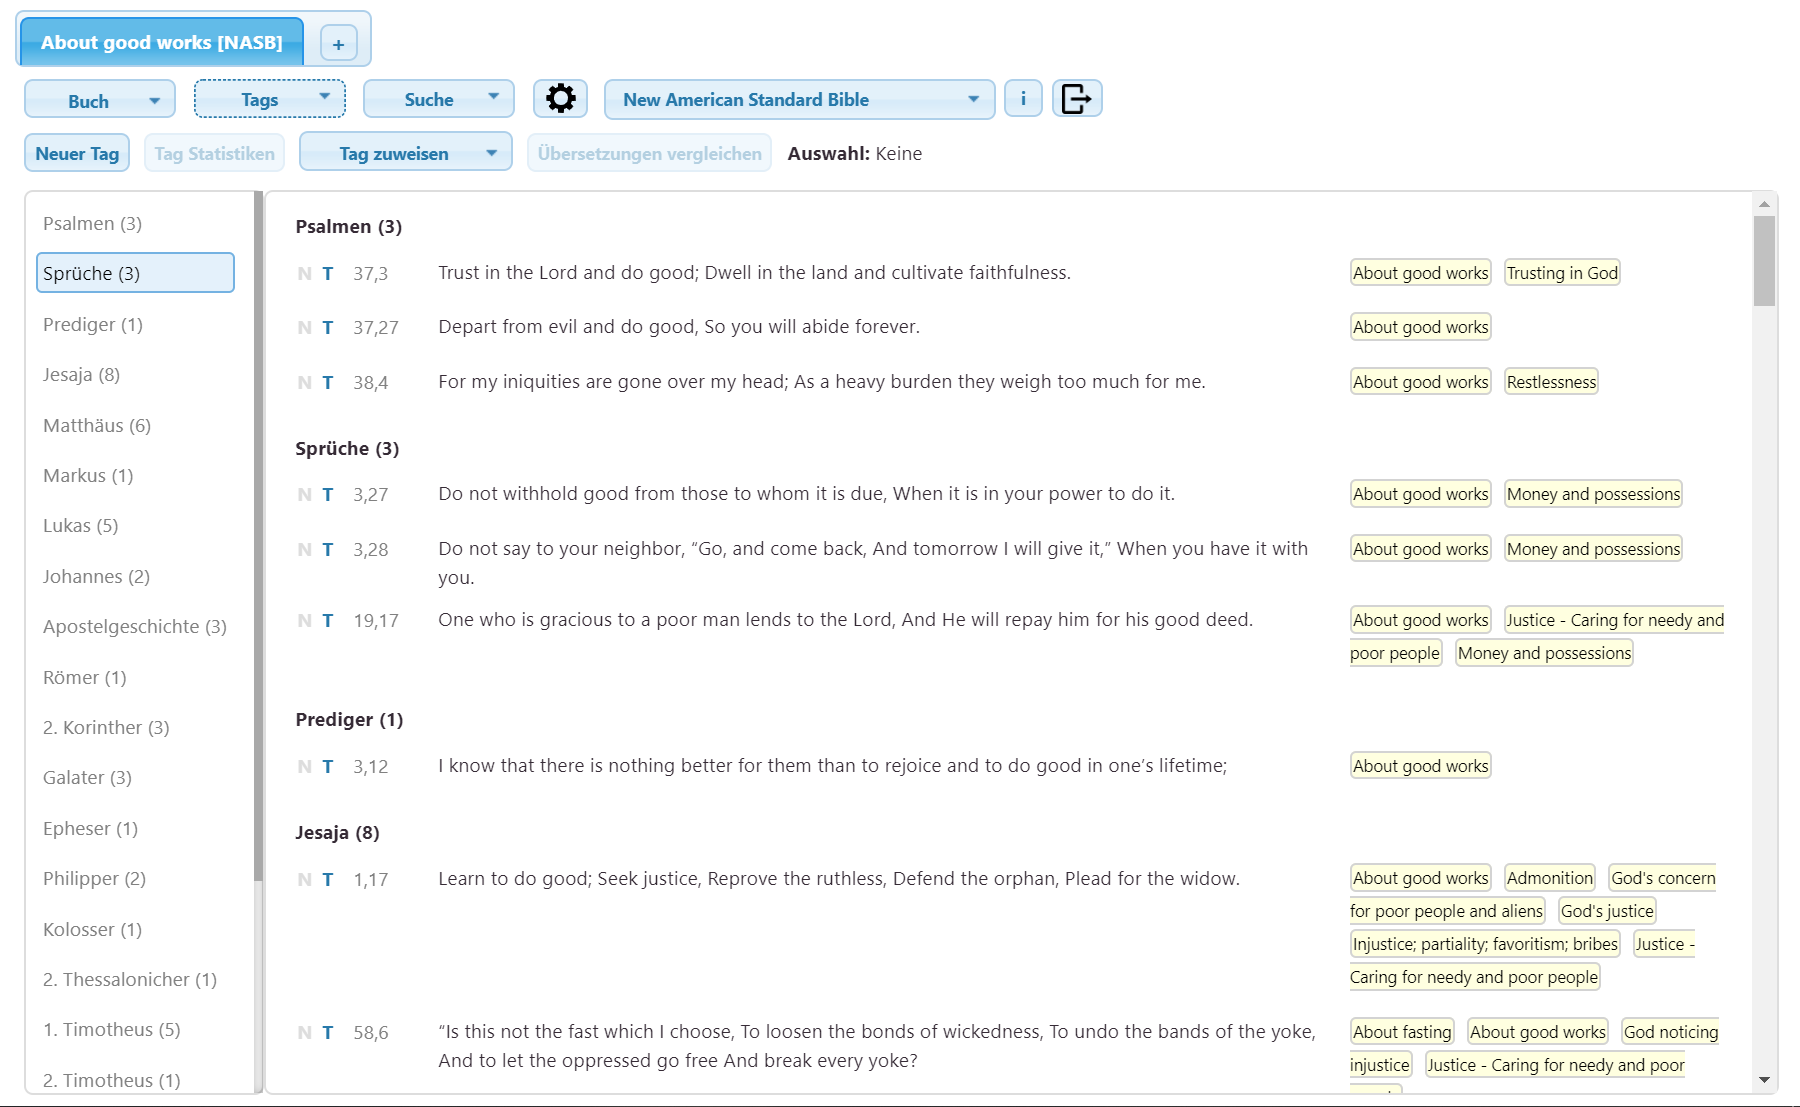 Ezra Bible App 0.13.0 Tagged Verse List